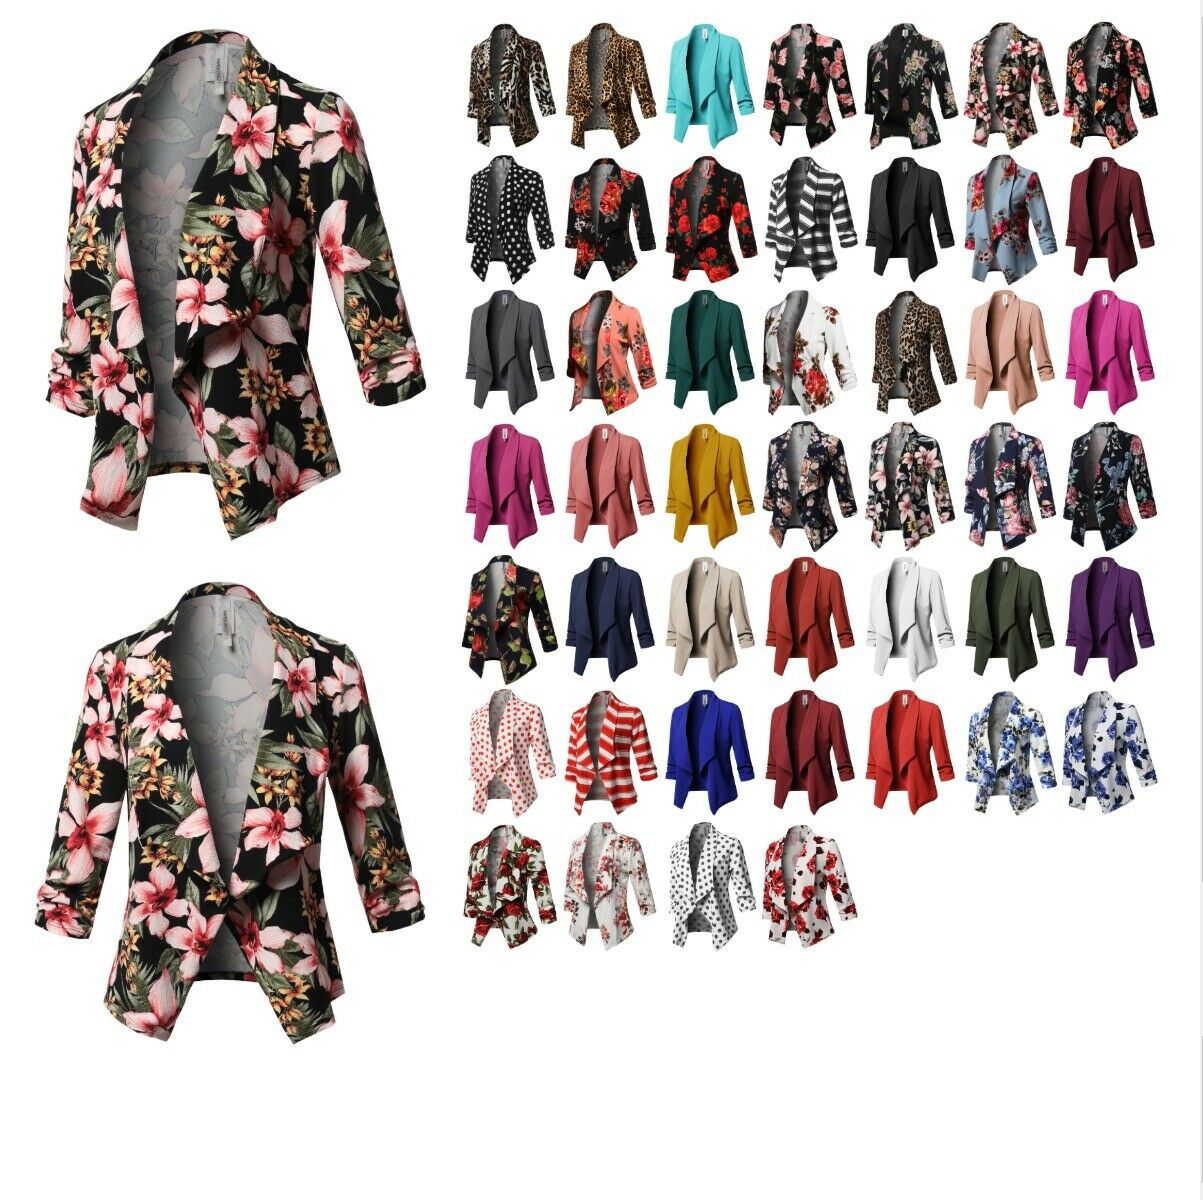 Fashionoutfit Women's Solid/print Stretch 3/4 Gathered Sleeve Open Blazer Jacket